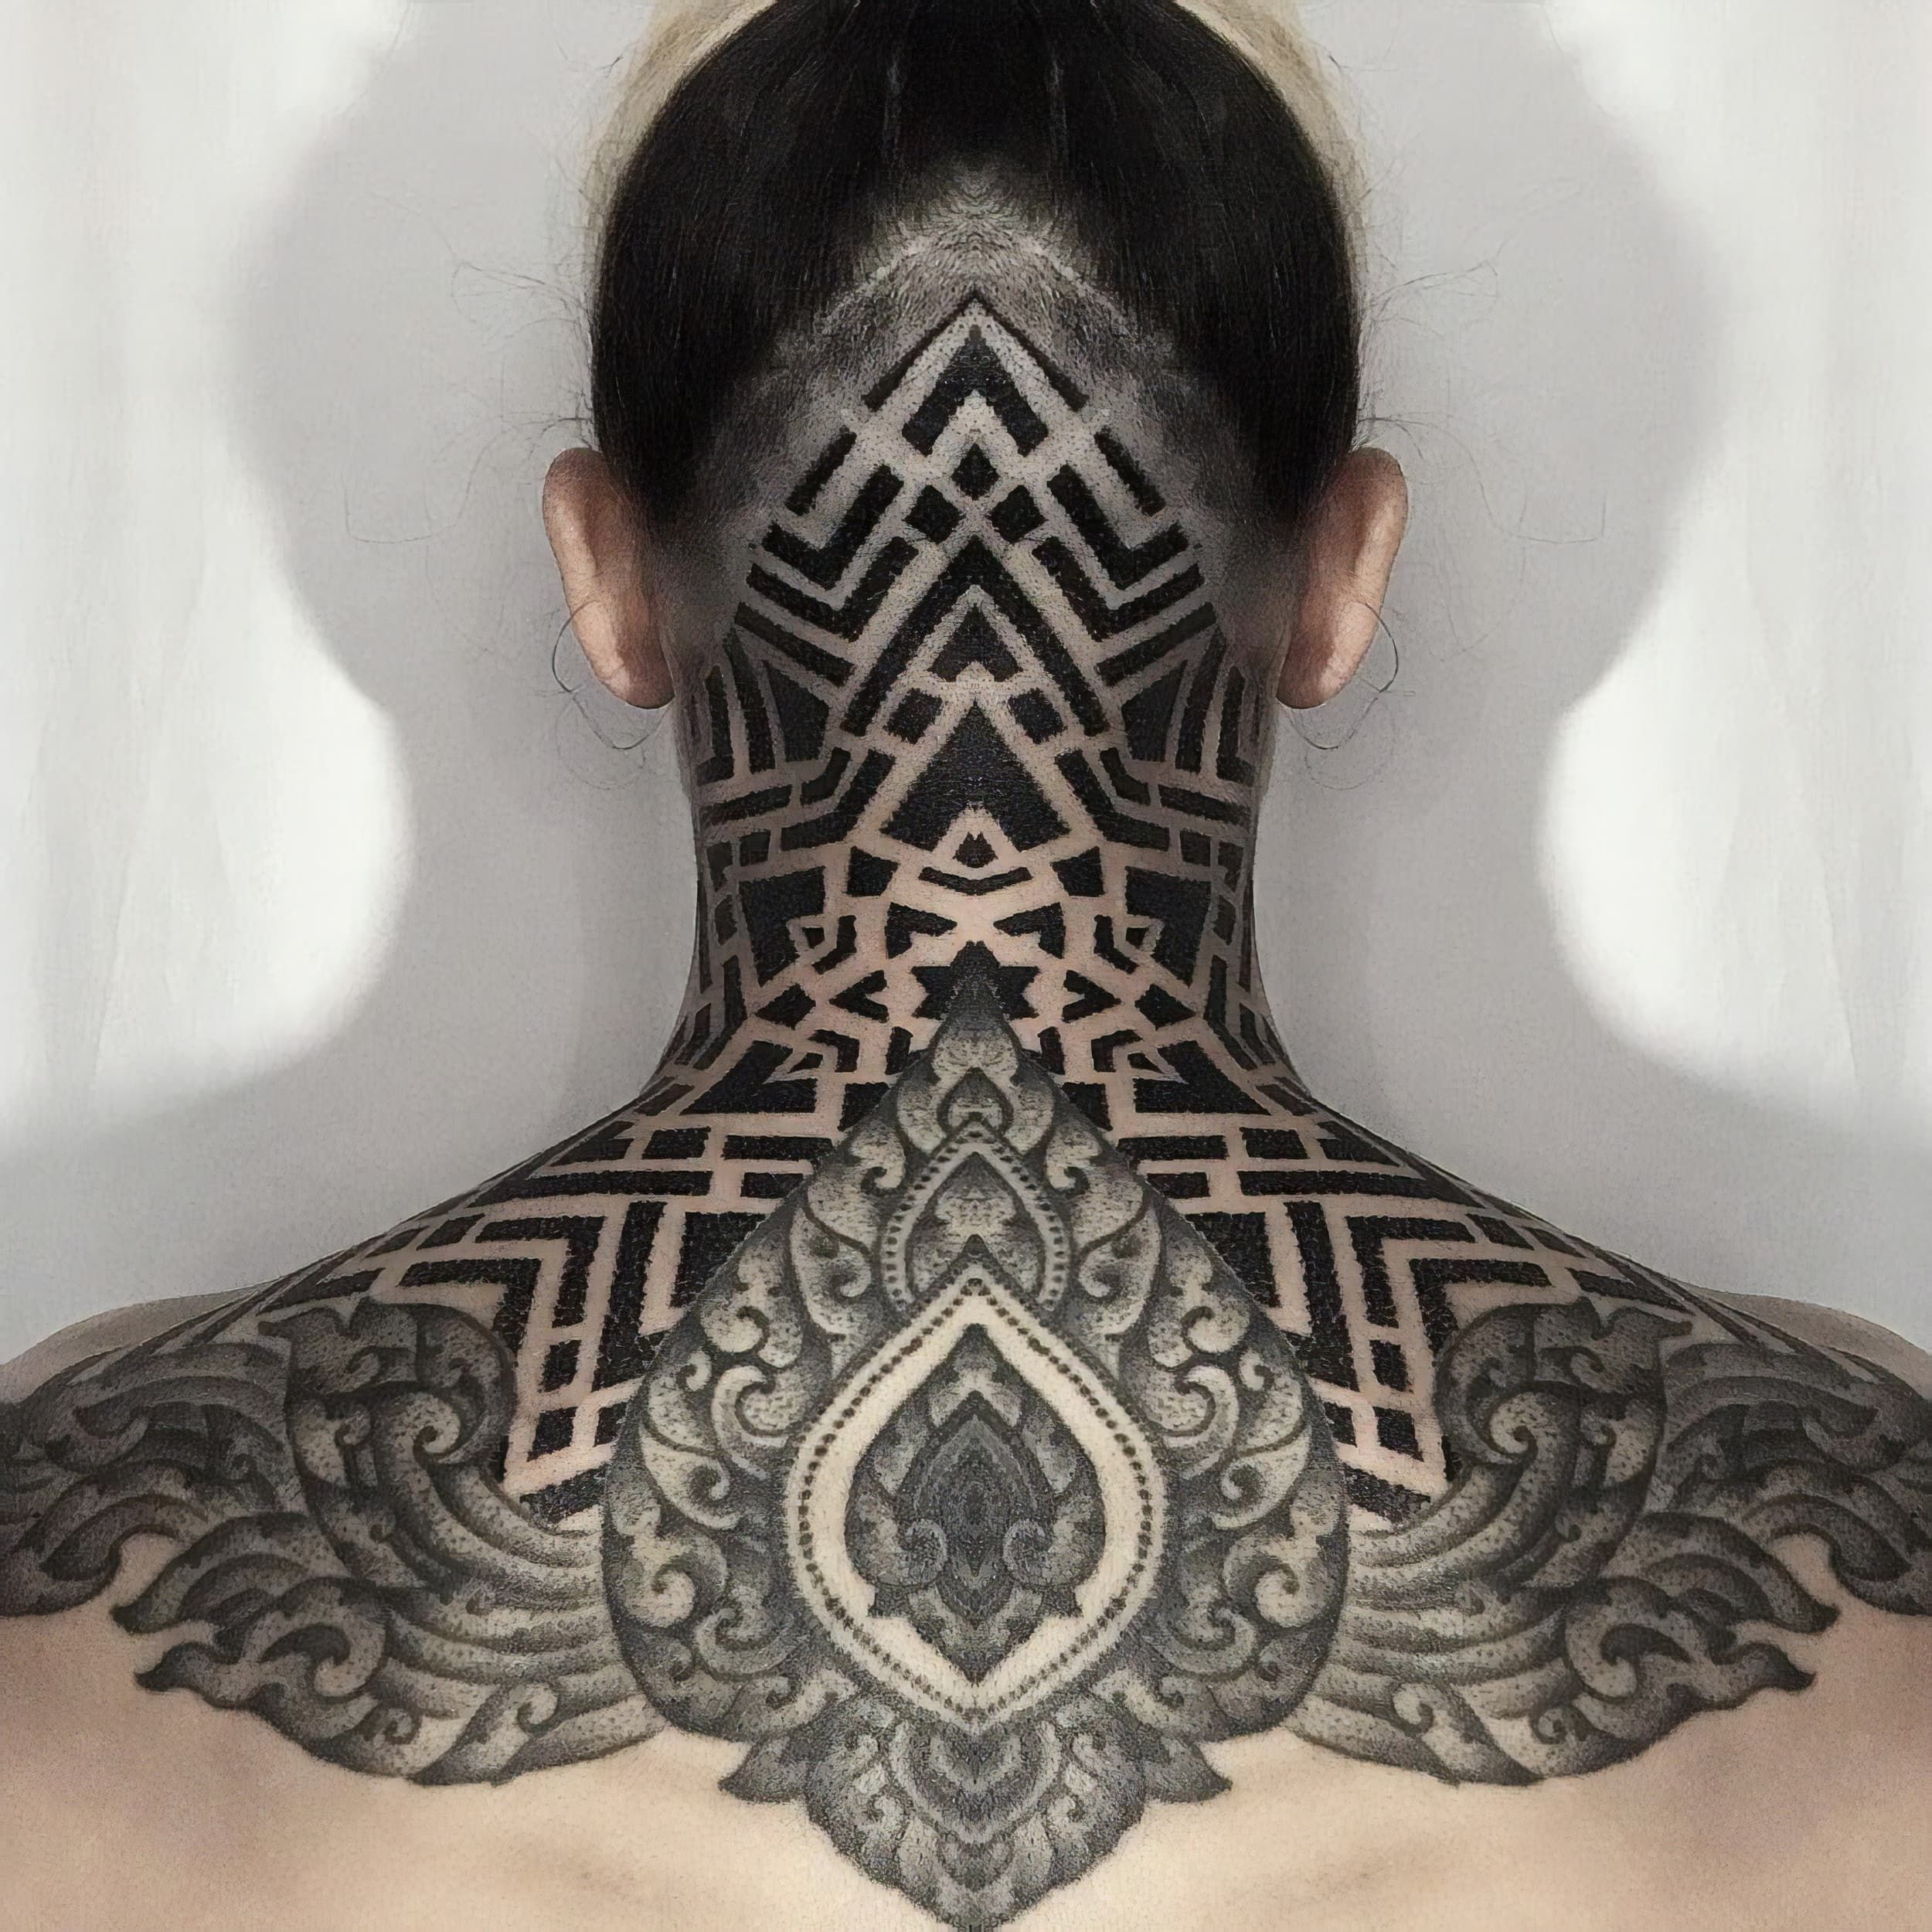 Tattoo Portfolio by Devynne Dlubac - Creative Ink Tattoo Studio